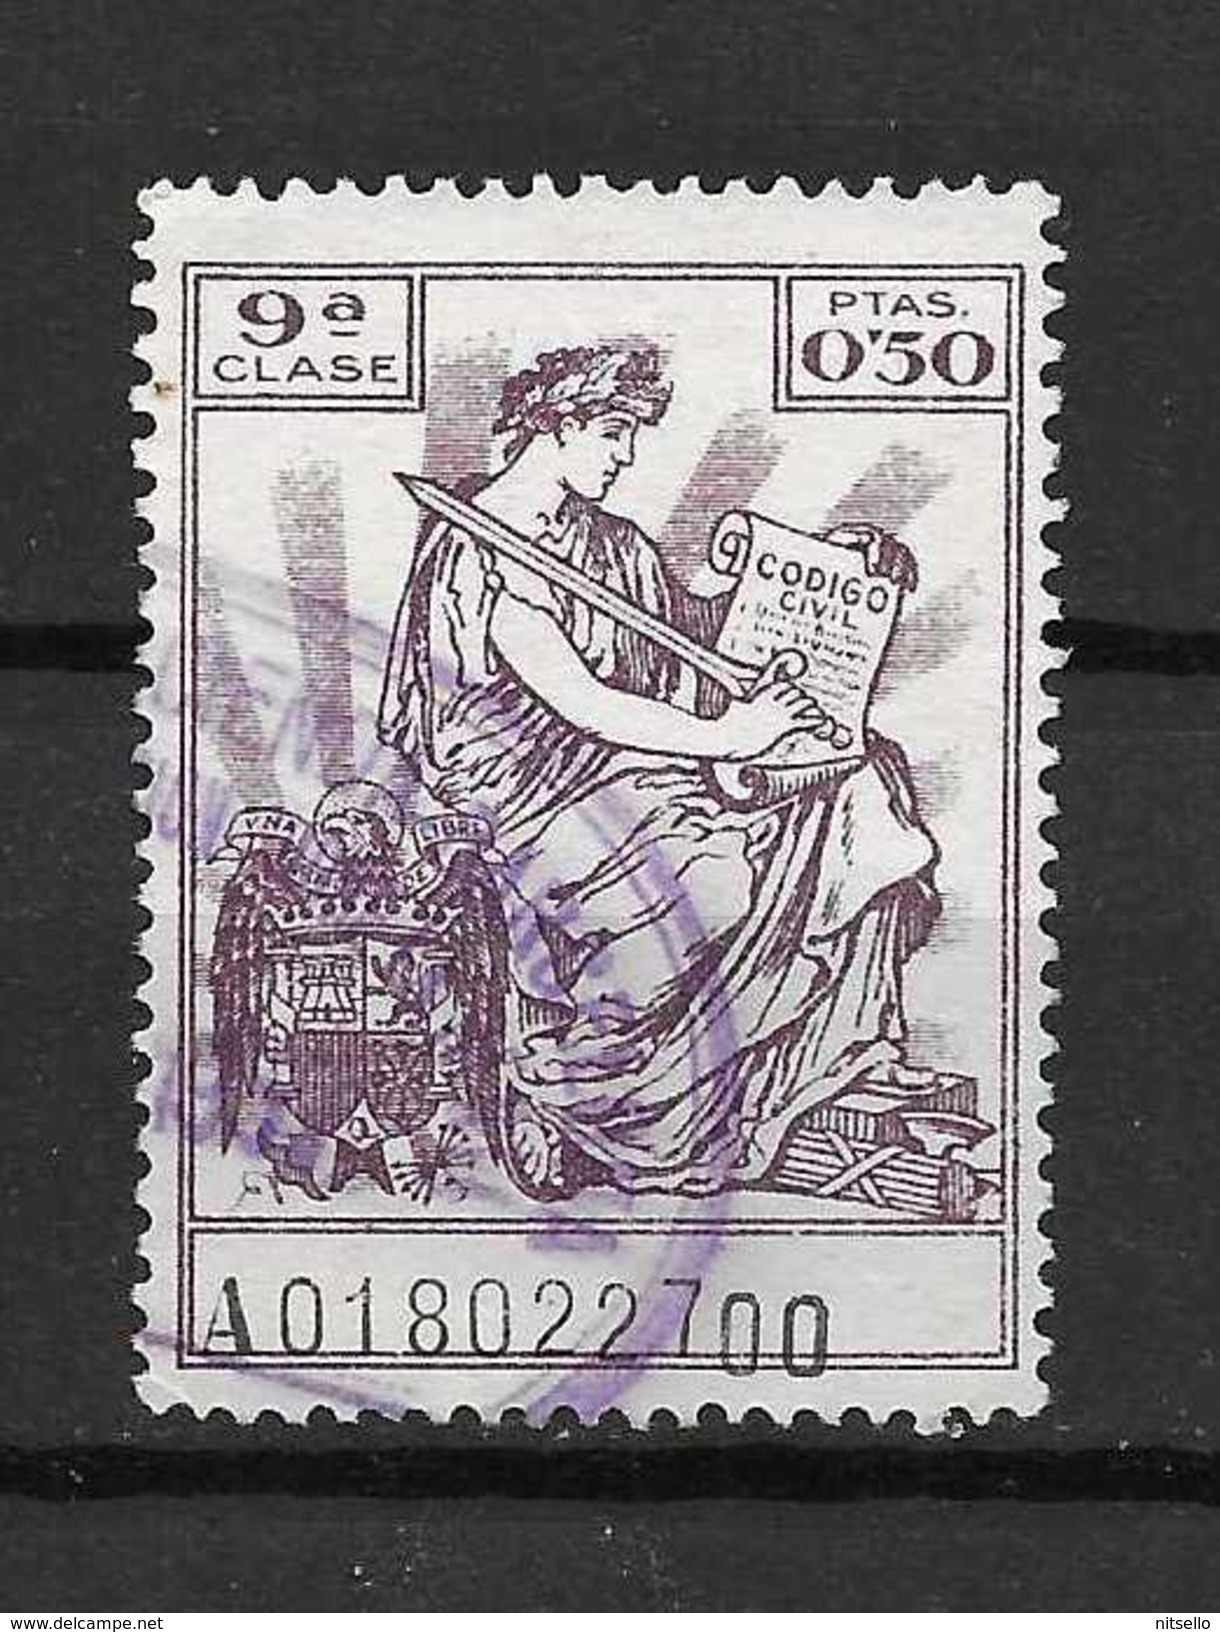 LOTE 1891 B   ///  ESPAÑA  FISCALES -   9ª CLASE - Revenue Stamps